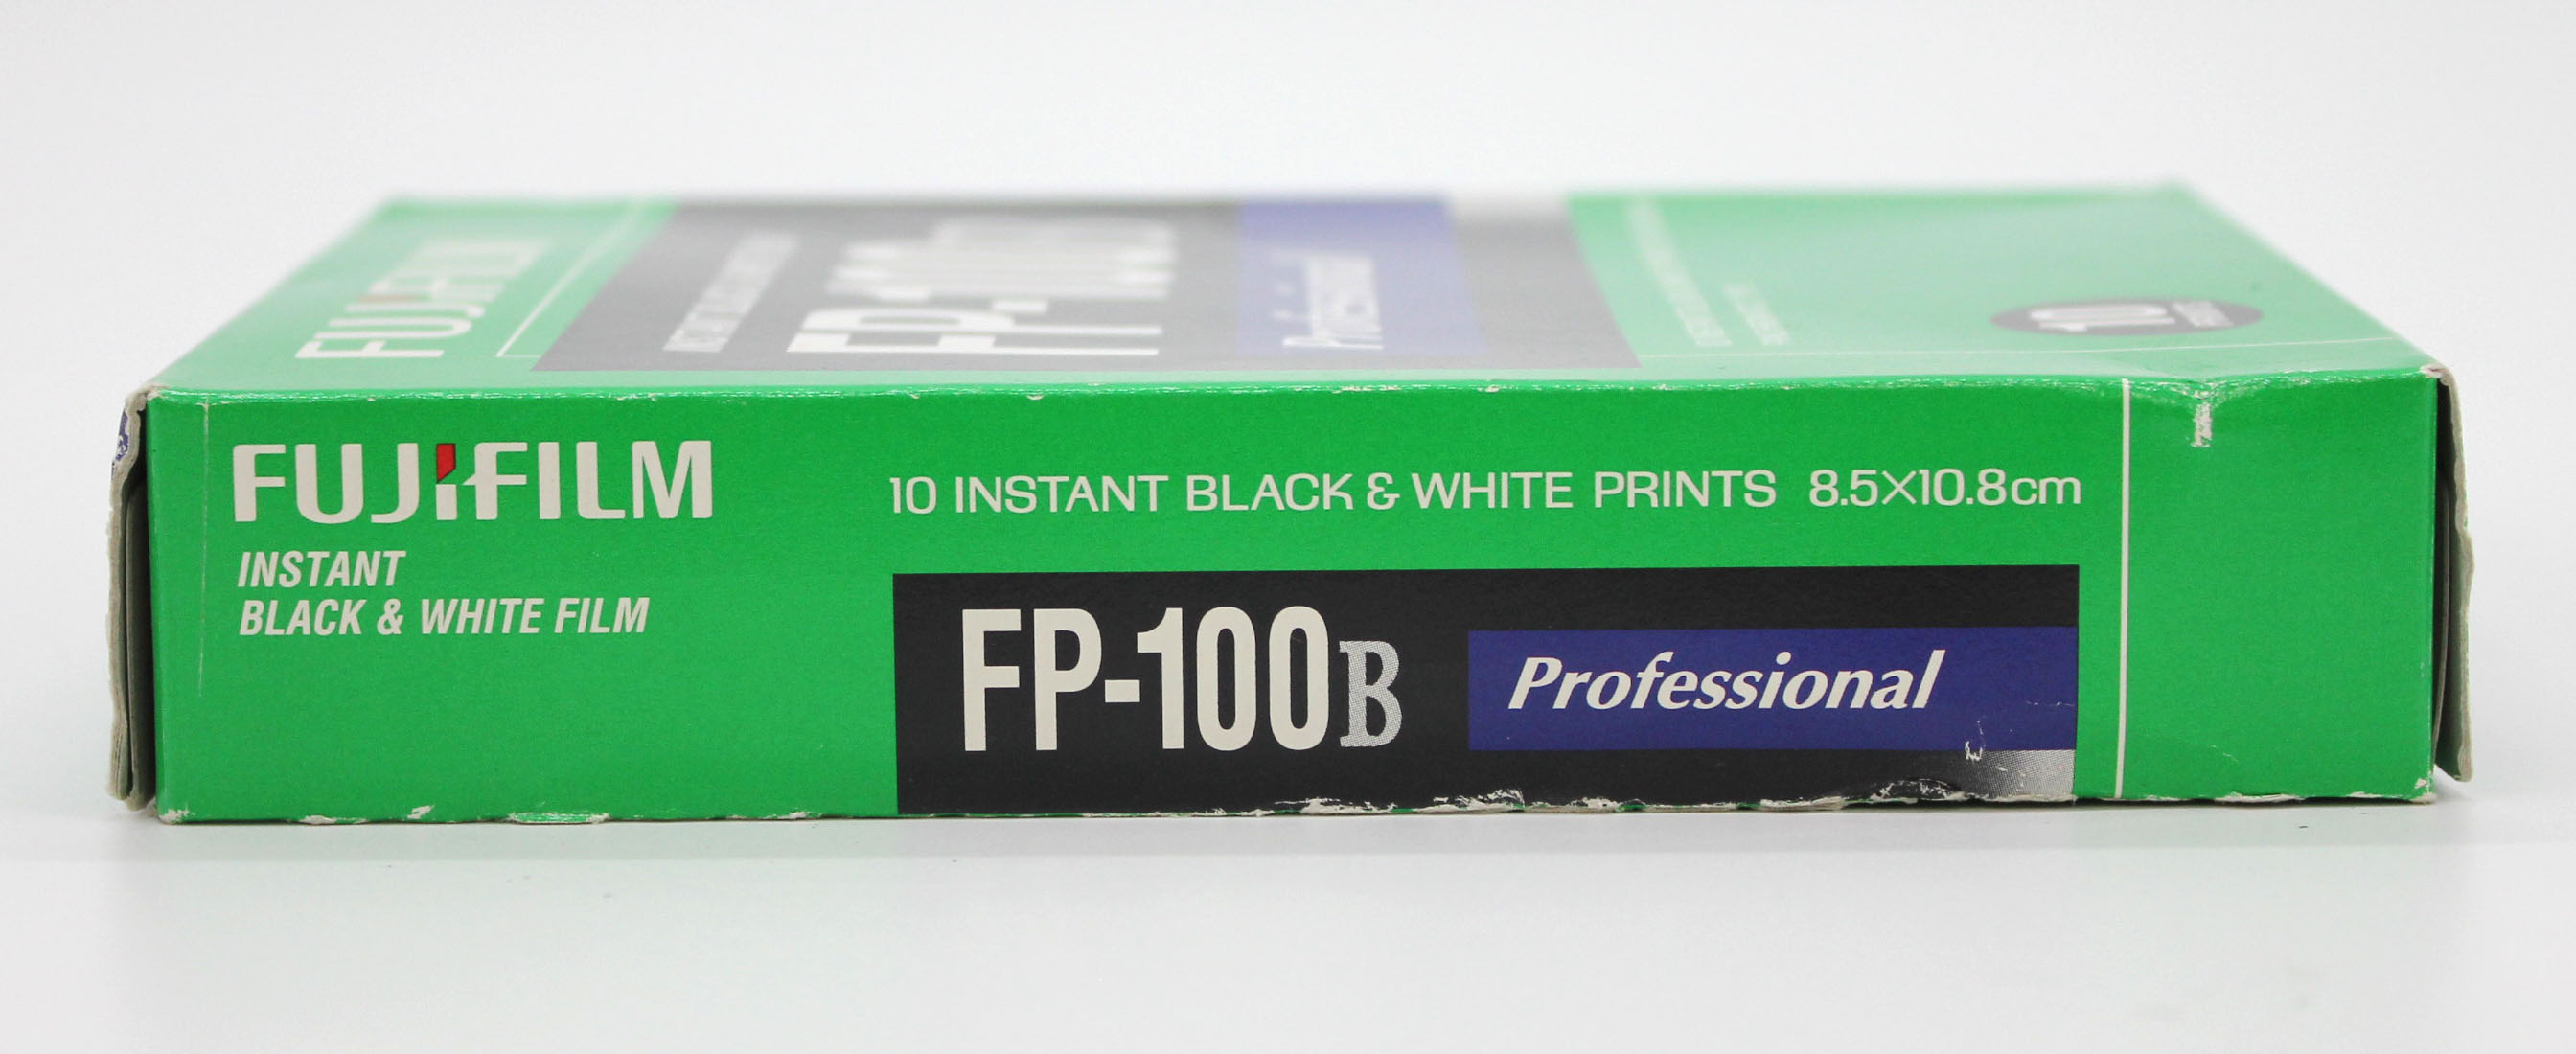  Fujifilm FP-100B Professional Instant Black & White Film (Exp 2009) from Japan Photo 3